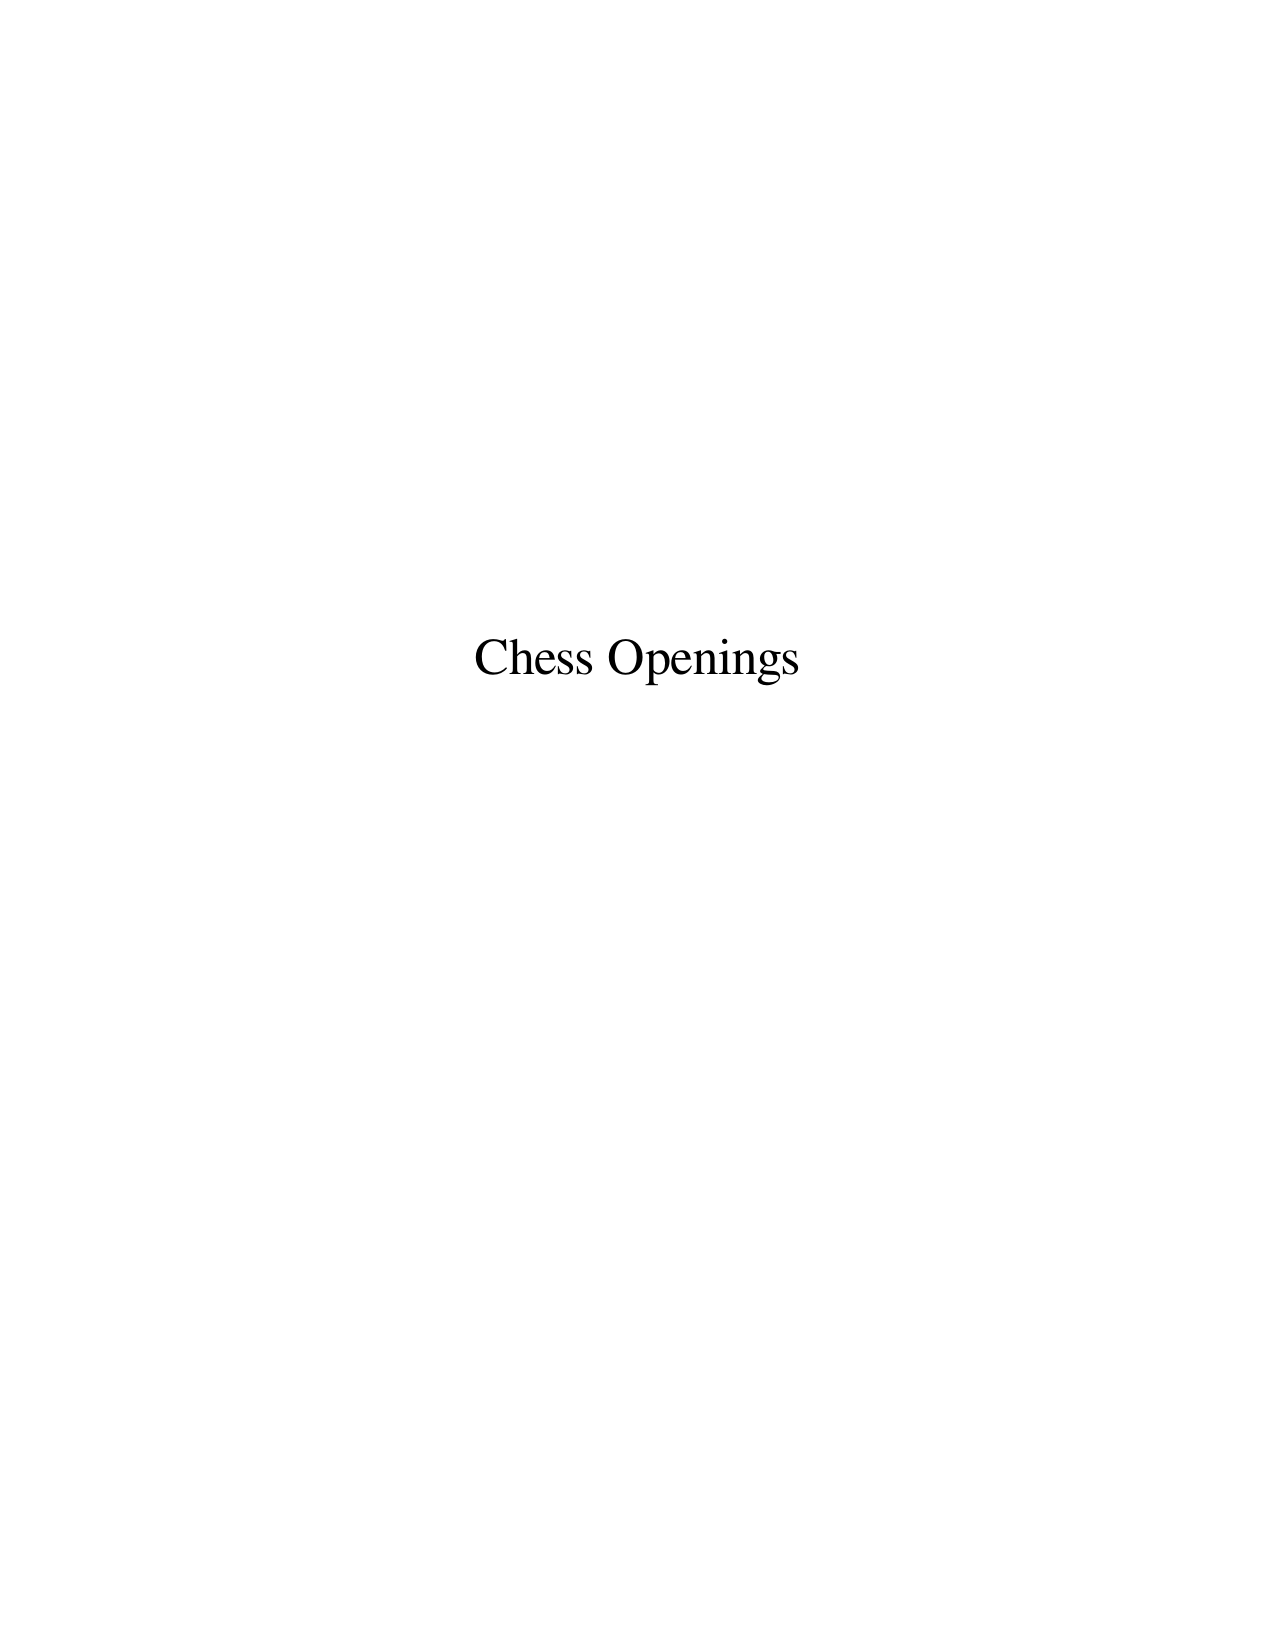 CHESS OPENINGS BY EXAMPLE: ALEKHINE DEFENSE By J. Schmidt **BRAND